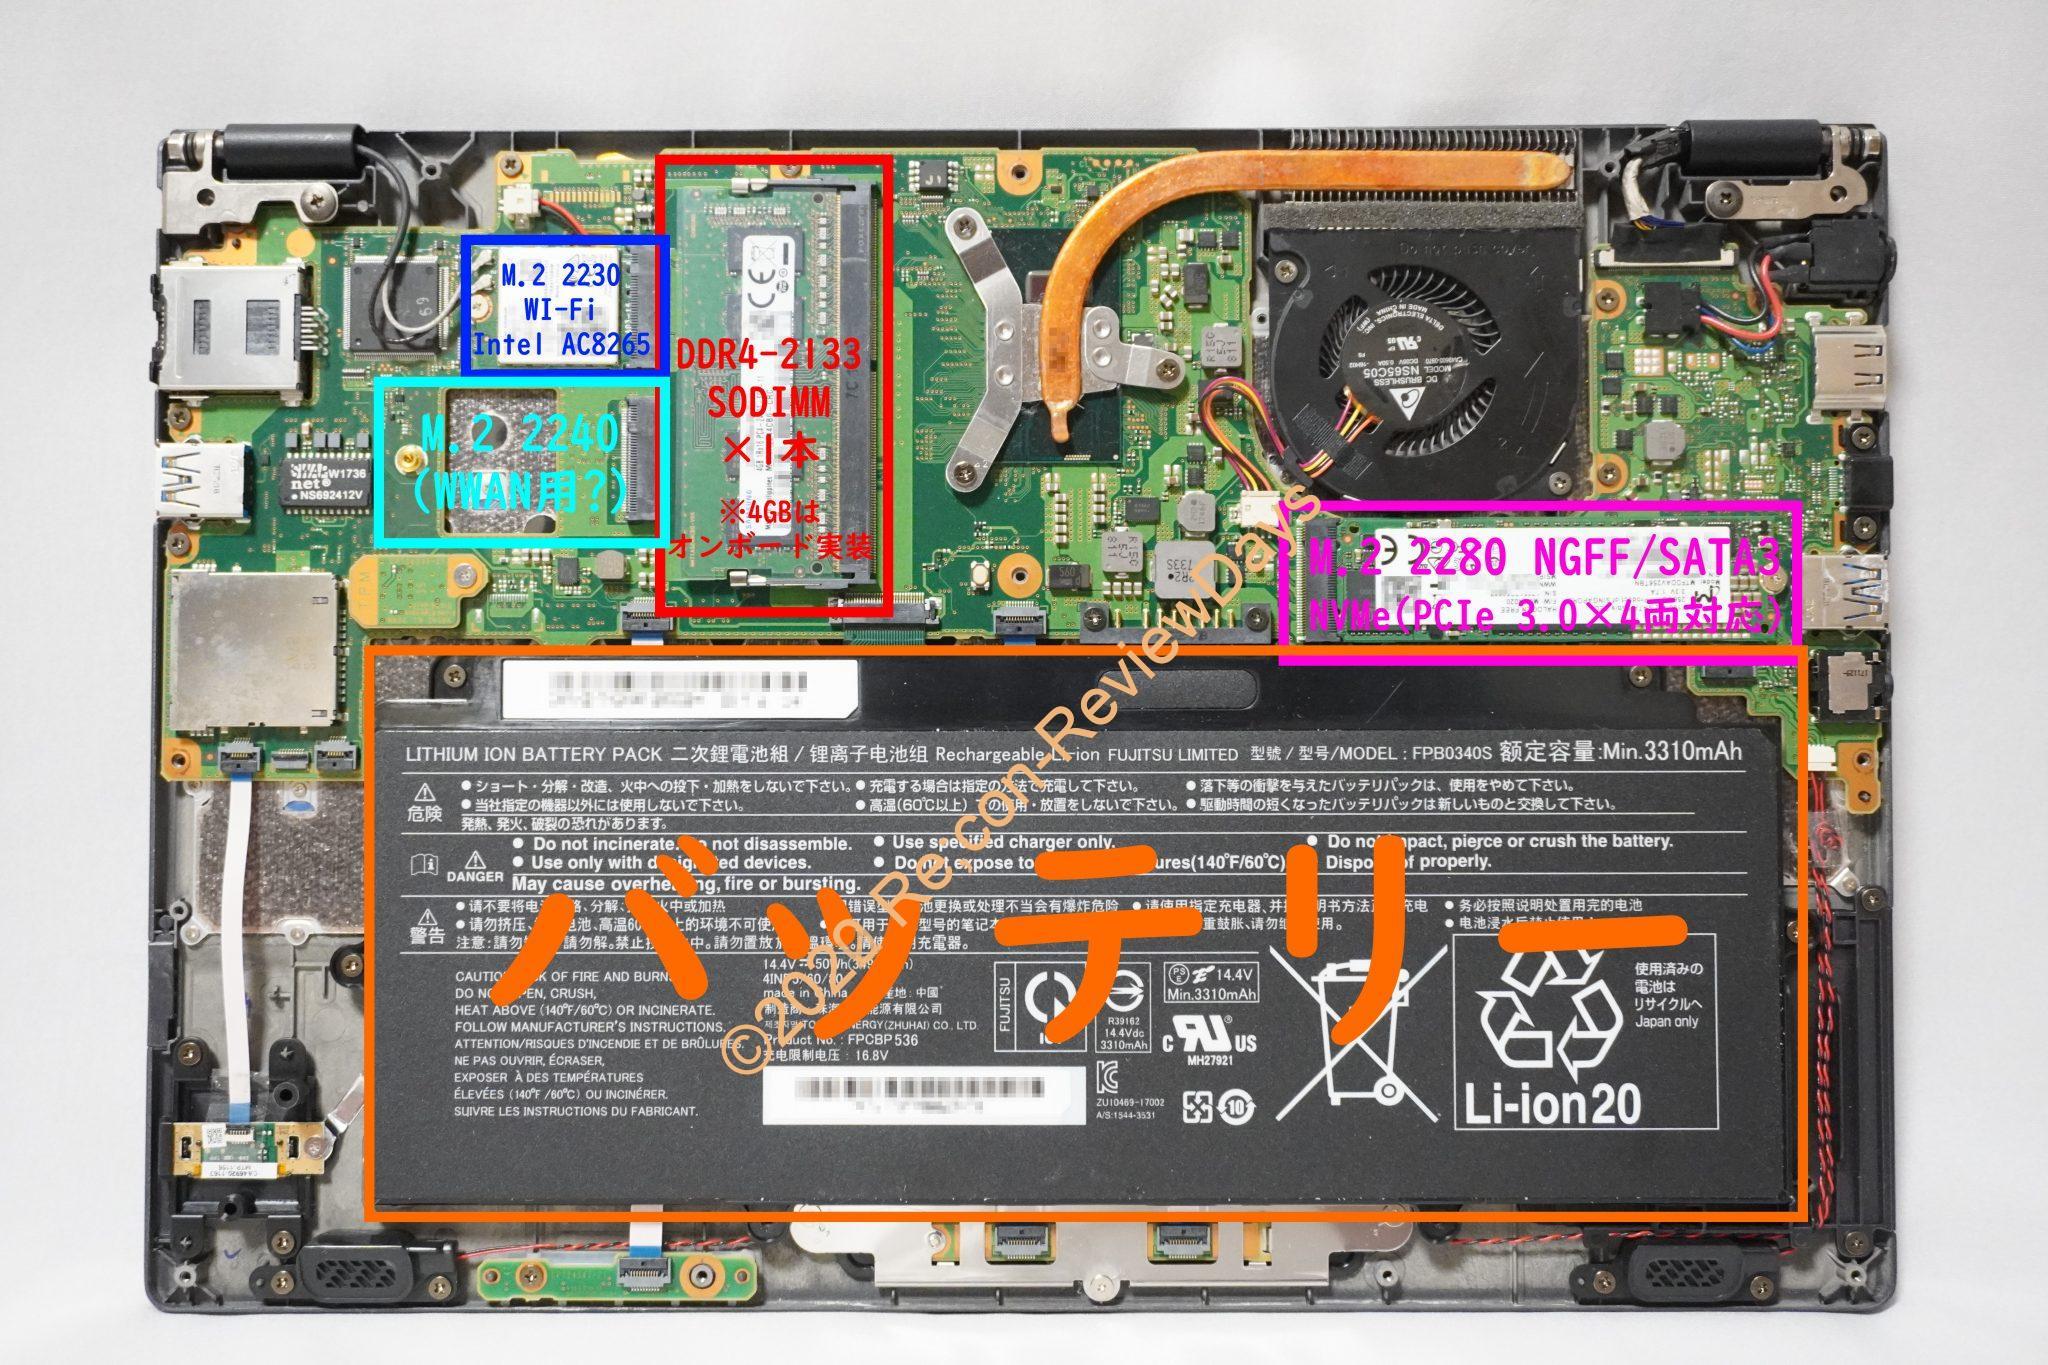 [B!] 富士通製のモバイルノートPC「LIFEBOOK U937/R」を分解してメモリやSSDを交換する #富士通 #Fujitsu